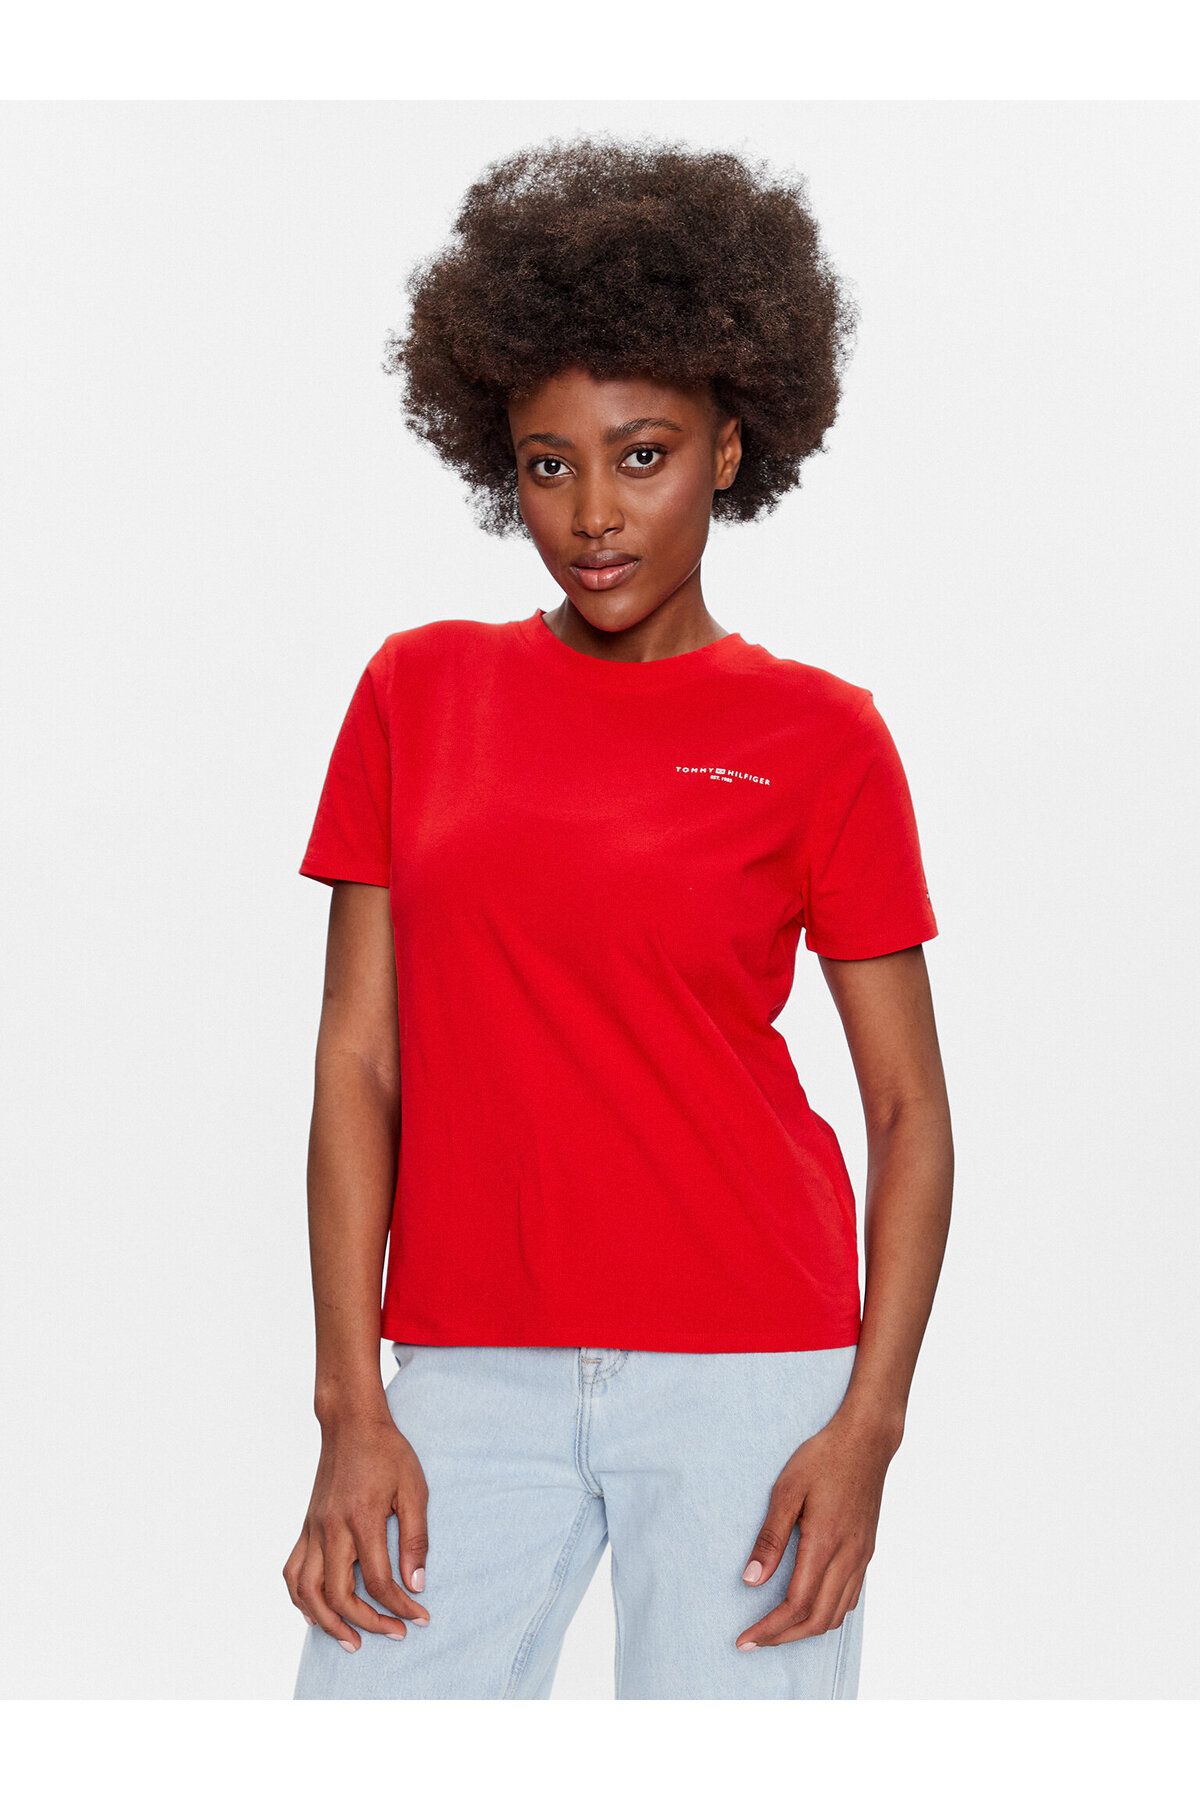 Tommy Hilfiger Kadın Pamuklu Yuvarlak Yaka Marka Logolu Kırmızı T-Shirt WW0WW37877-SNE